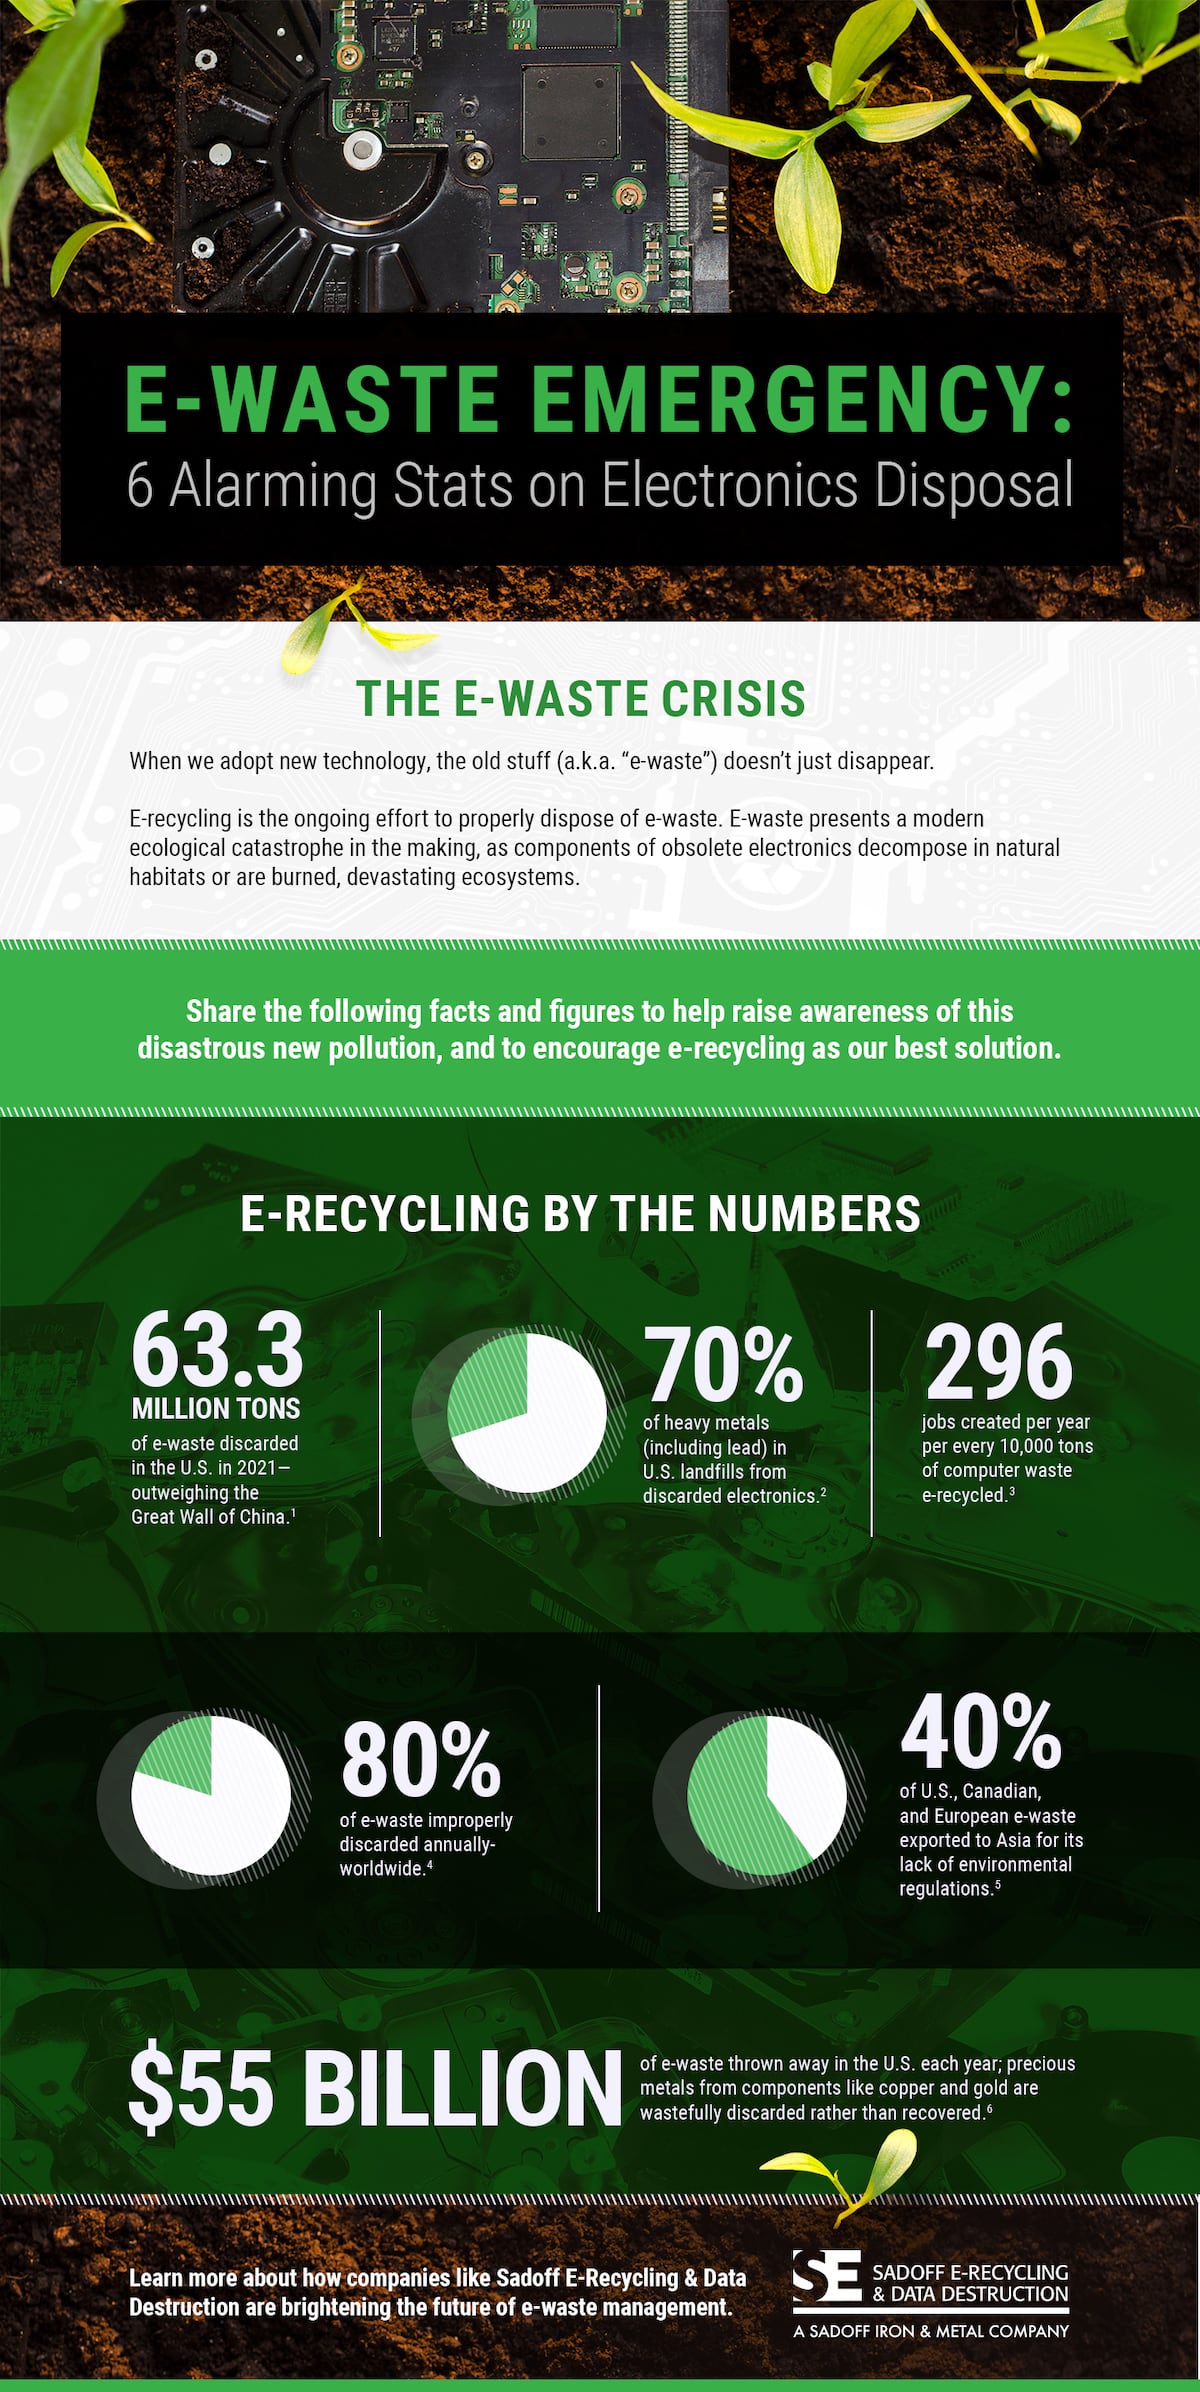 e-waste emergency - 6 alarming stats on electronics disposal